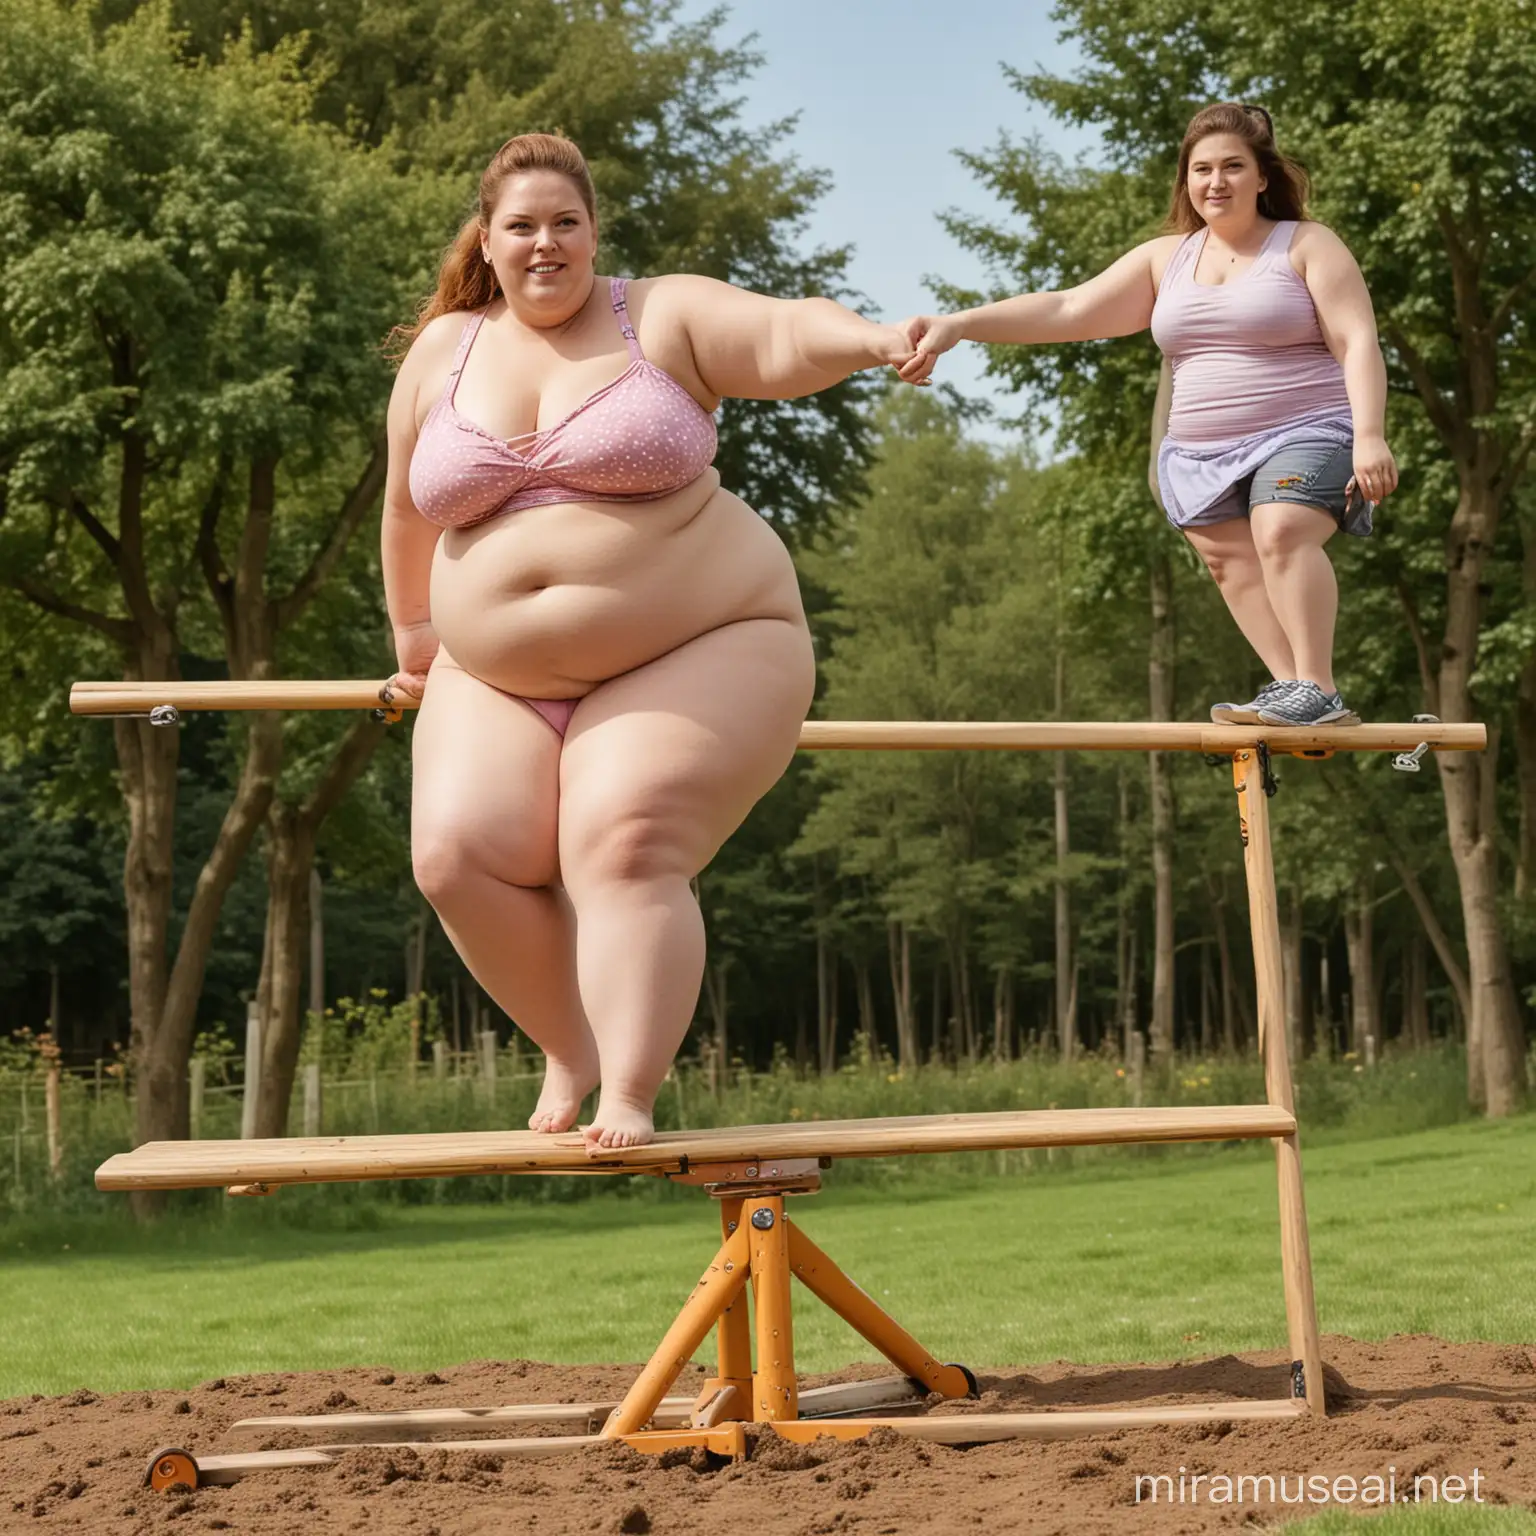 WeightBalanced Fun Playful Seesaw Scene with Fat Woman and Thin Man